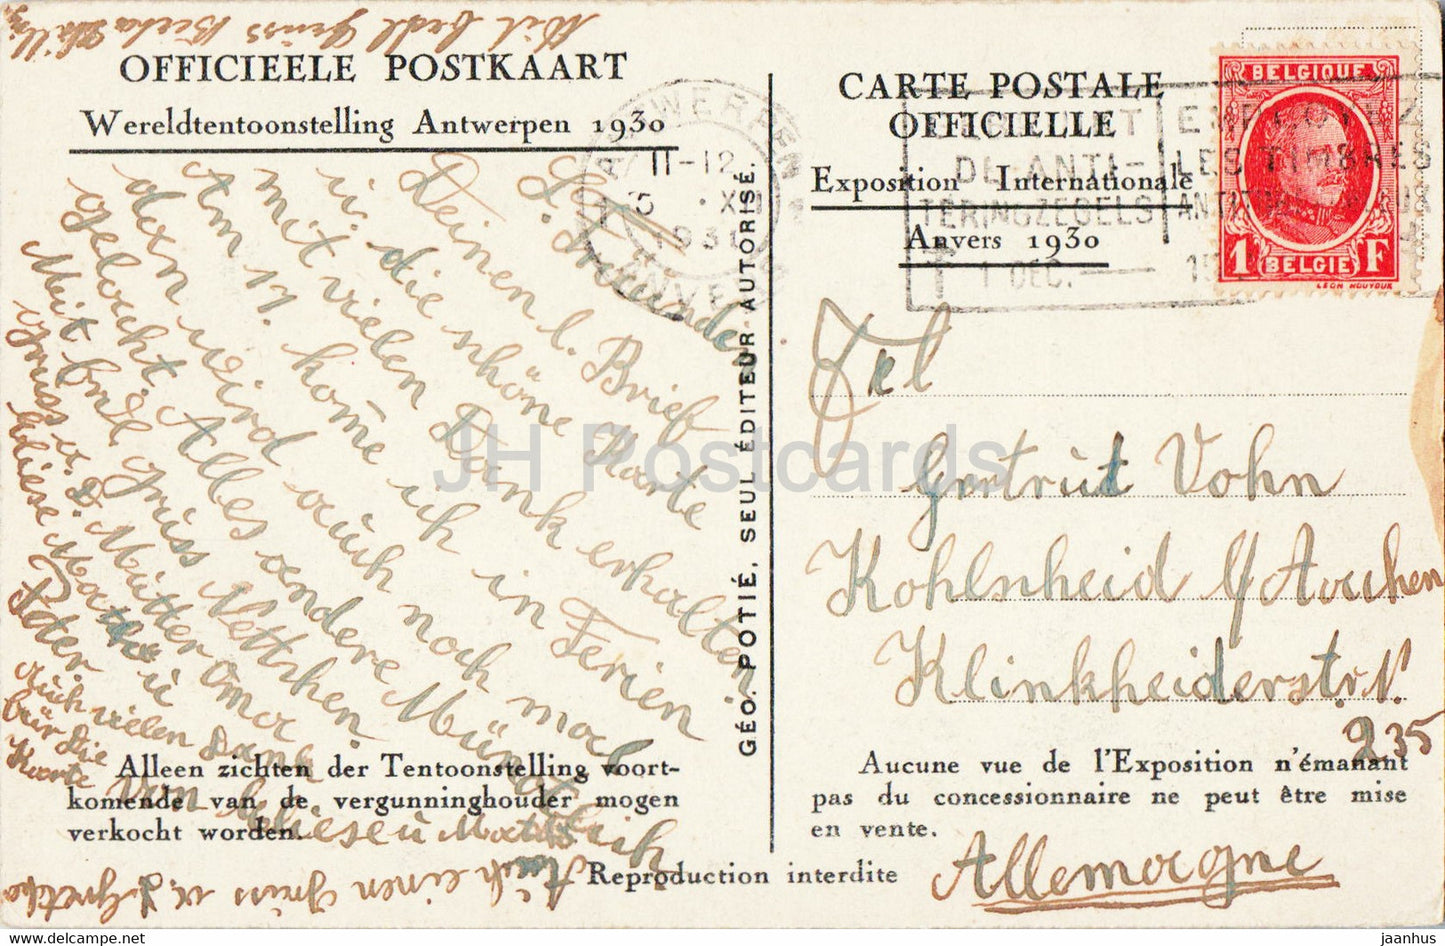 Anvers - Anvers - Paviljoen der Stad Antwerpen - carte postale ancienne - 1930 - Belgique - utilisé